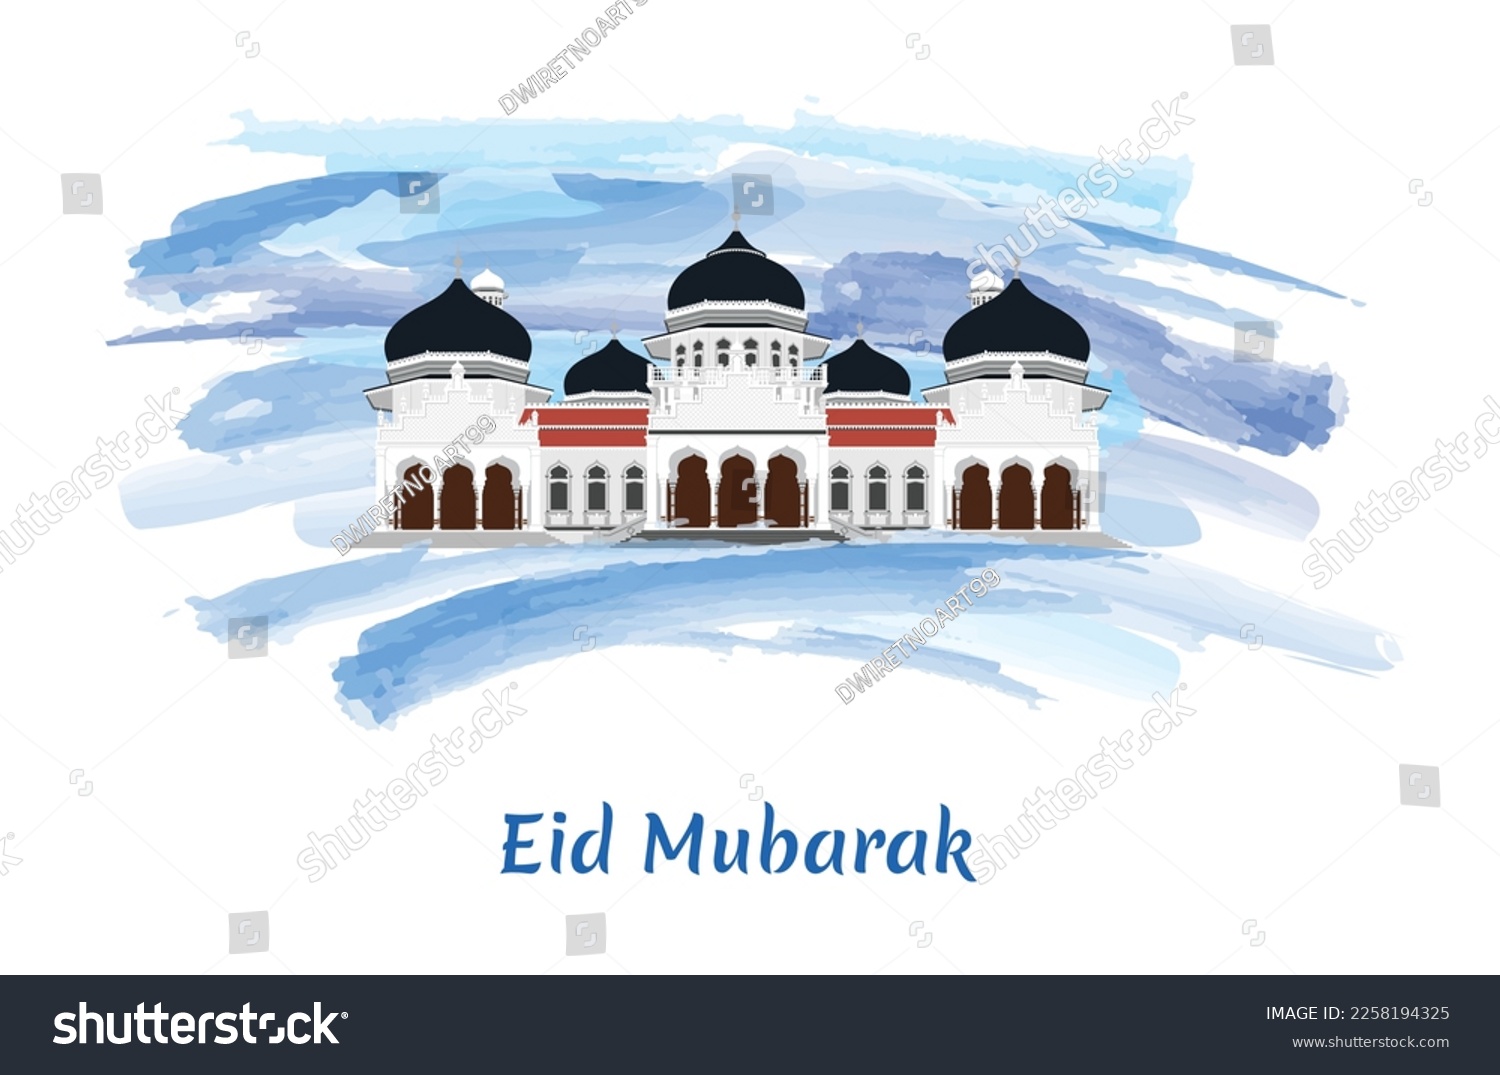 SVG of Eid Mubarak Greeting with Masjid Raya Baiturrahman Nanggroe Aceh Darussalam Vector illustration, Isolated on Blue Artistic Watercolor Painting Brush Background. svg